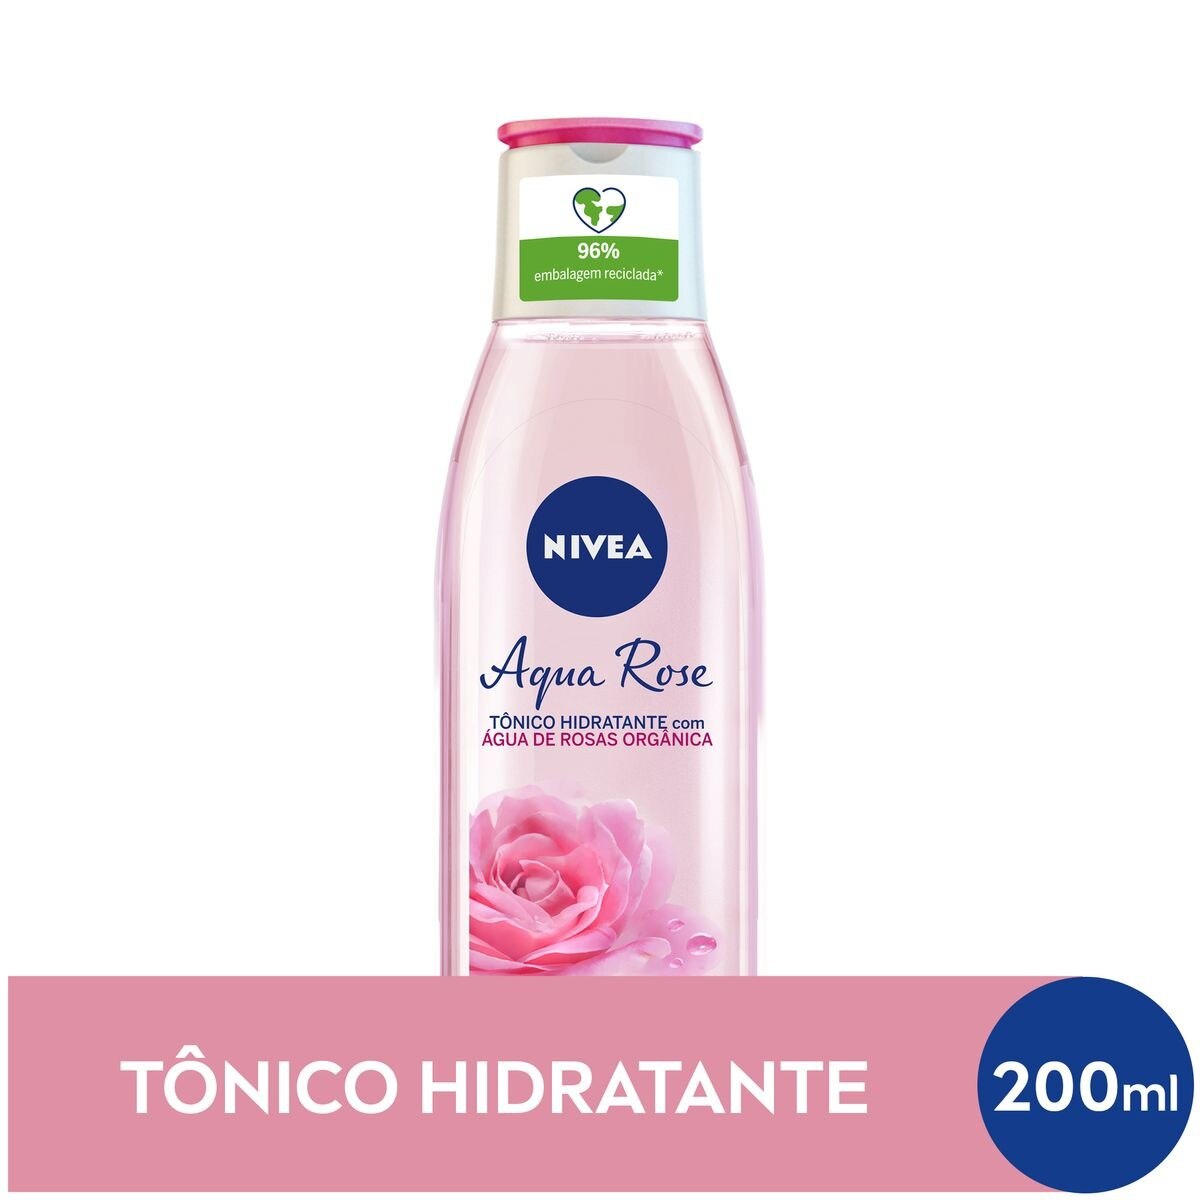 Tonico Hidratante Nivea Aqua Rose Agua de Rosas Organica 200ml